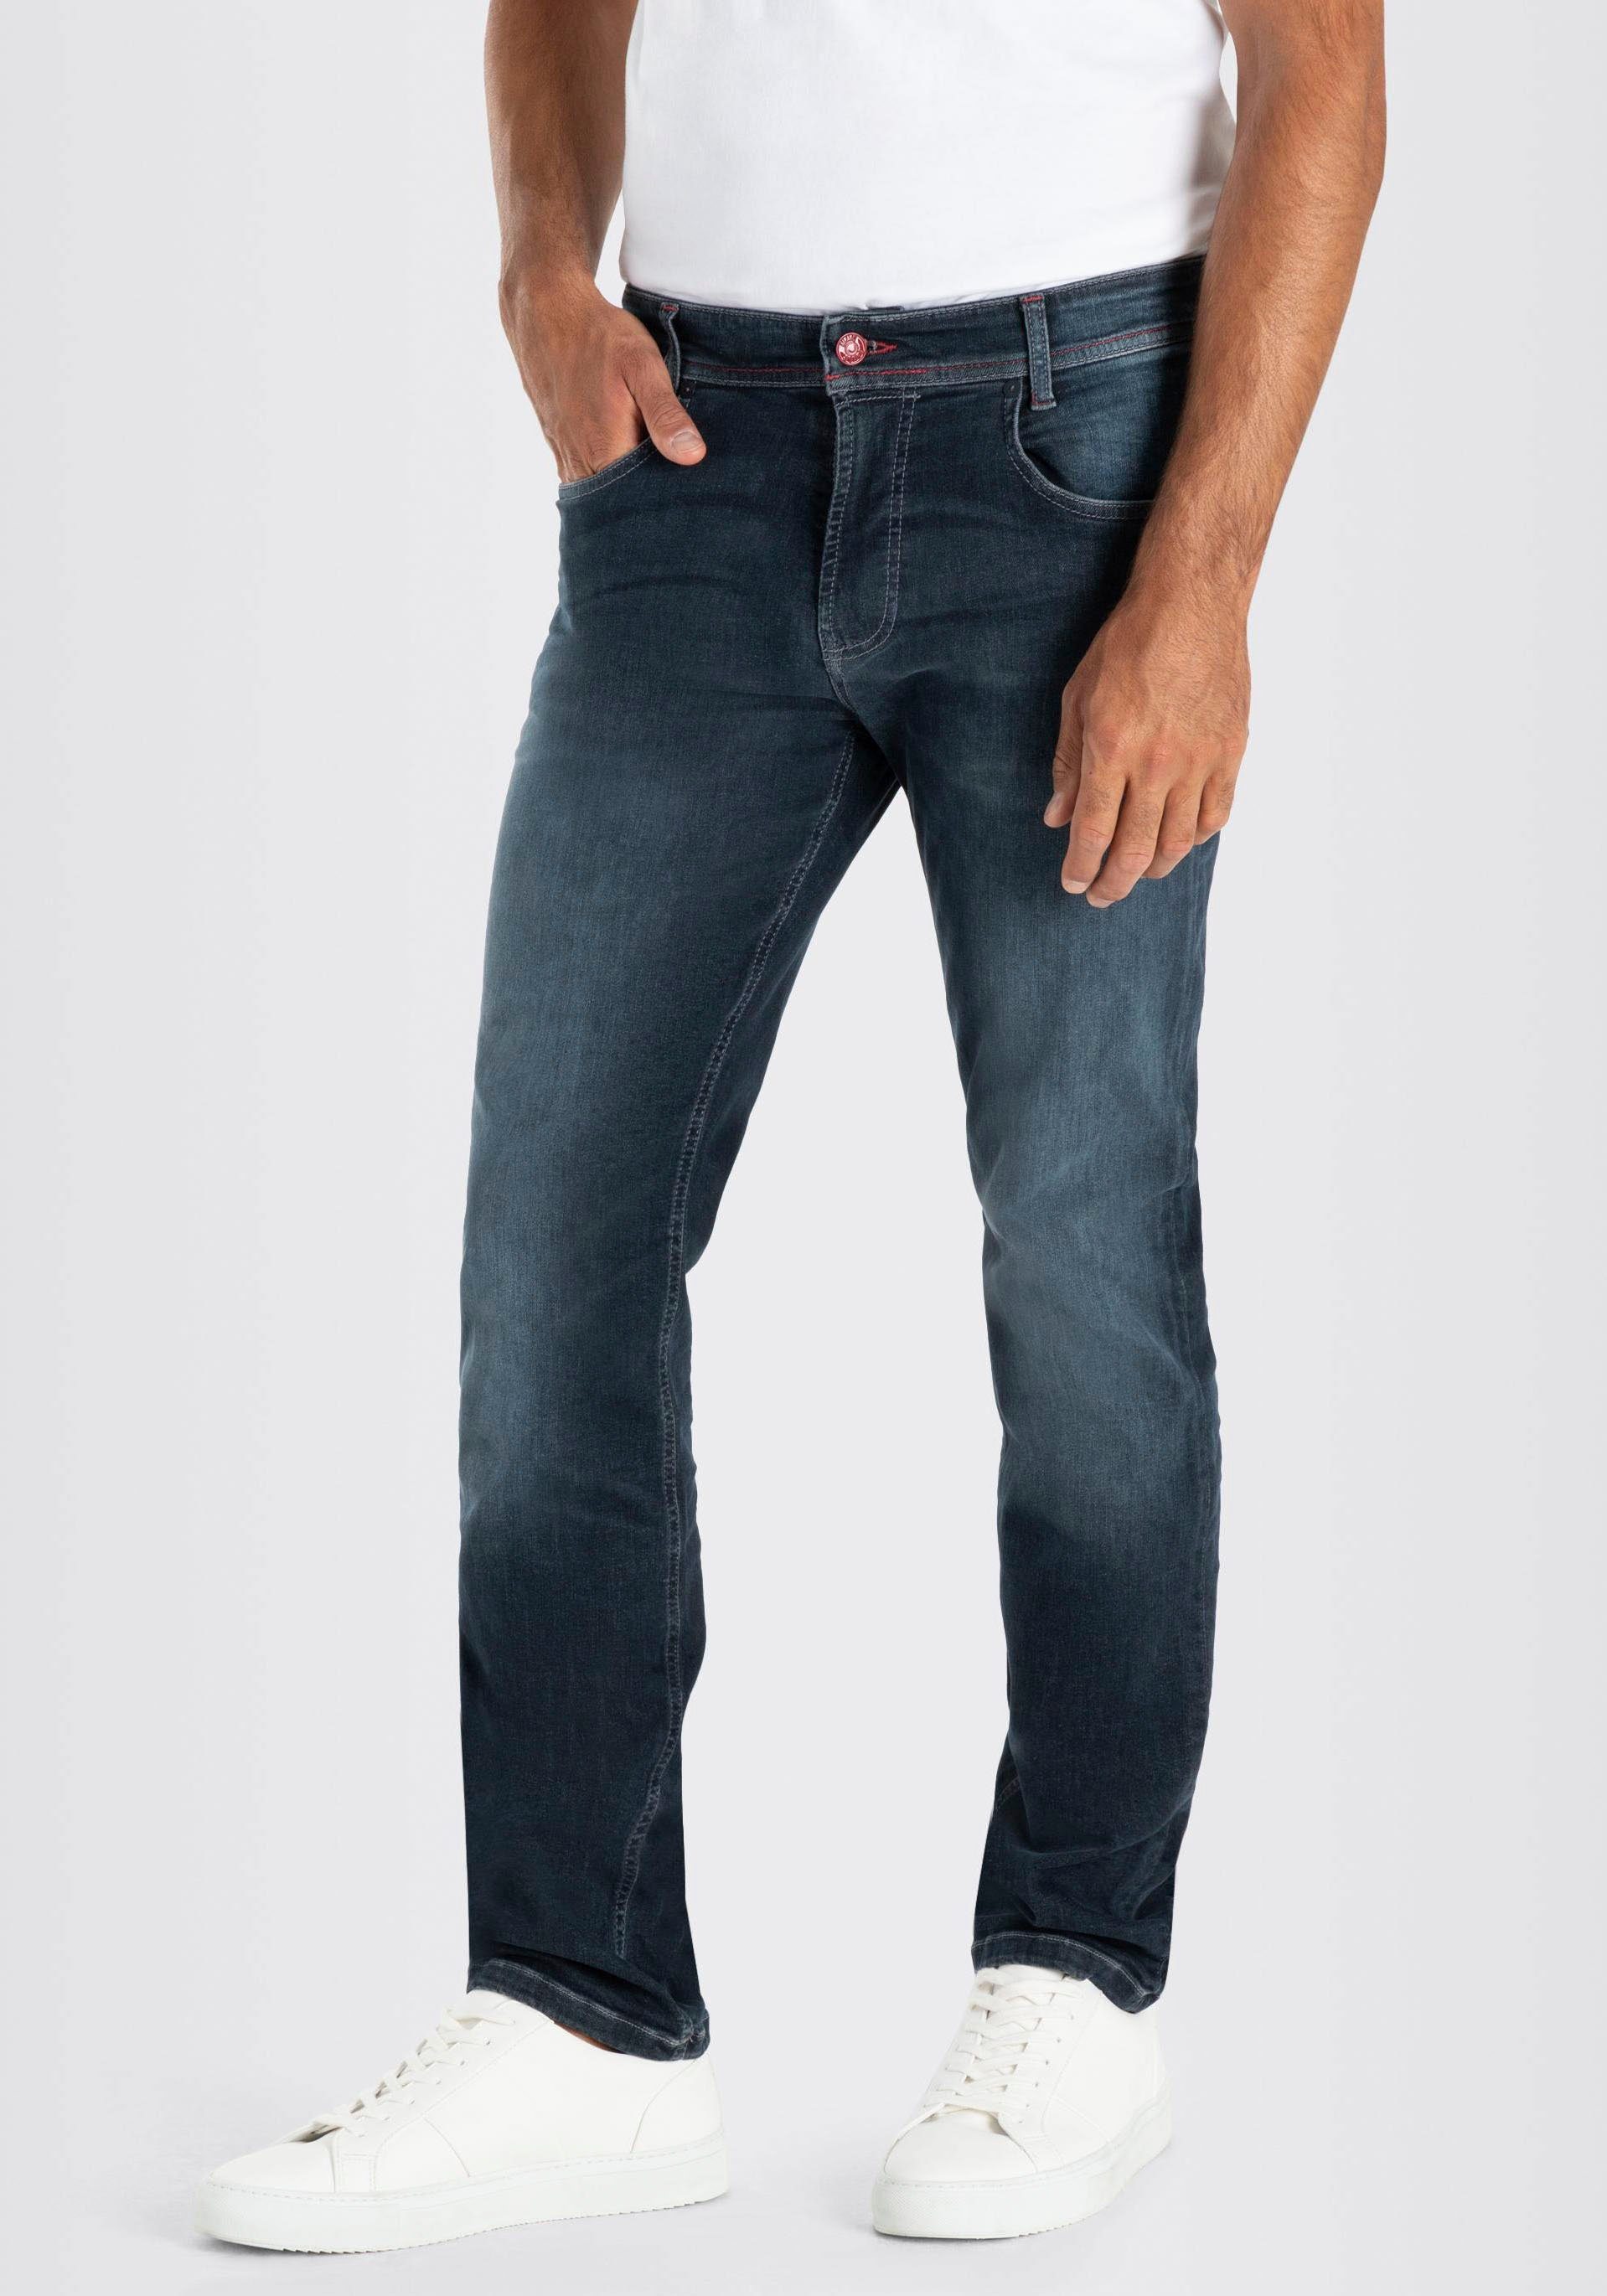 MAC Straight-Jeans wash blue Flexx-Driver lt.ebony super authentic elastisch